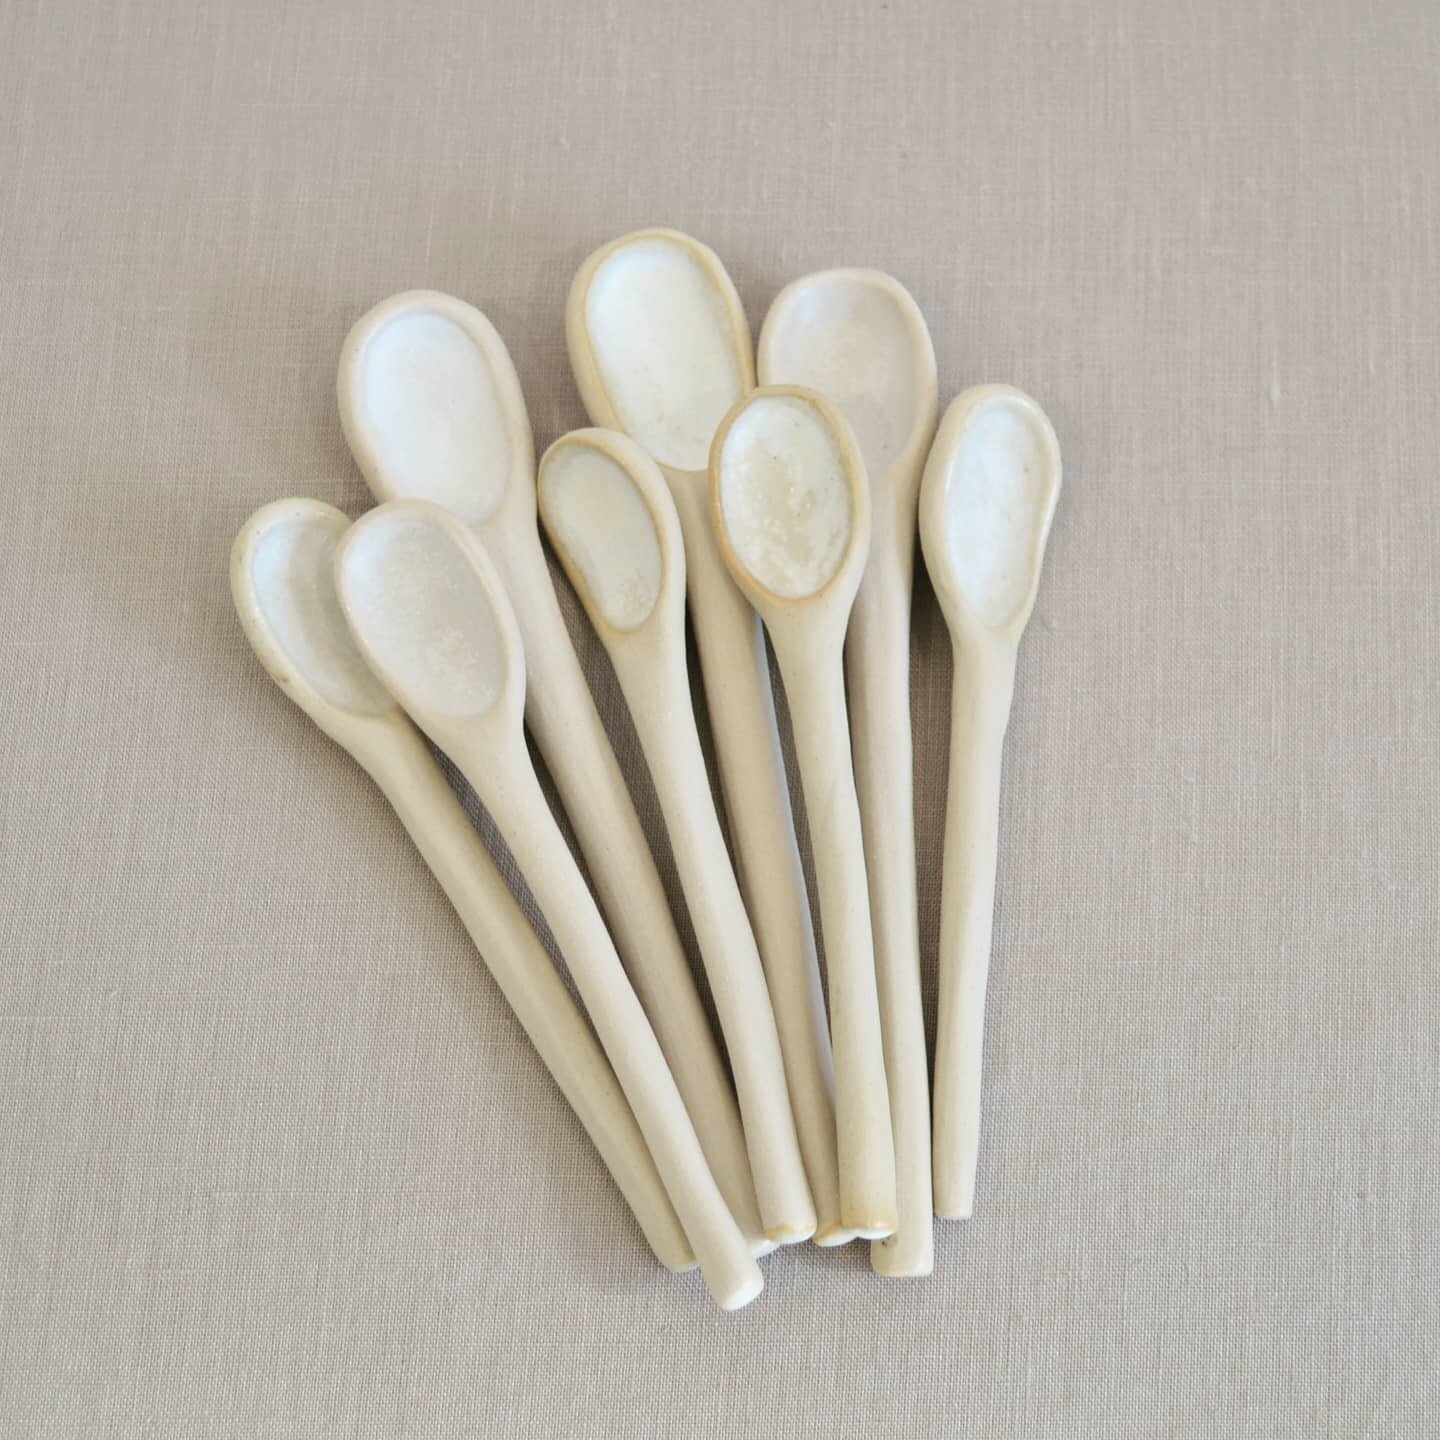 Simple stoneware spoons.
-
#spoonlove #ceramicspoons #handmade #makermade #simpleandstill #aconsideredhome #simpleliving